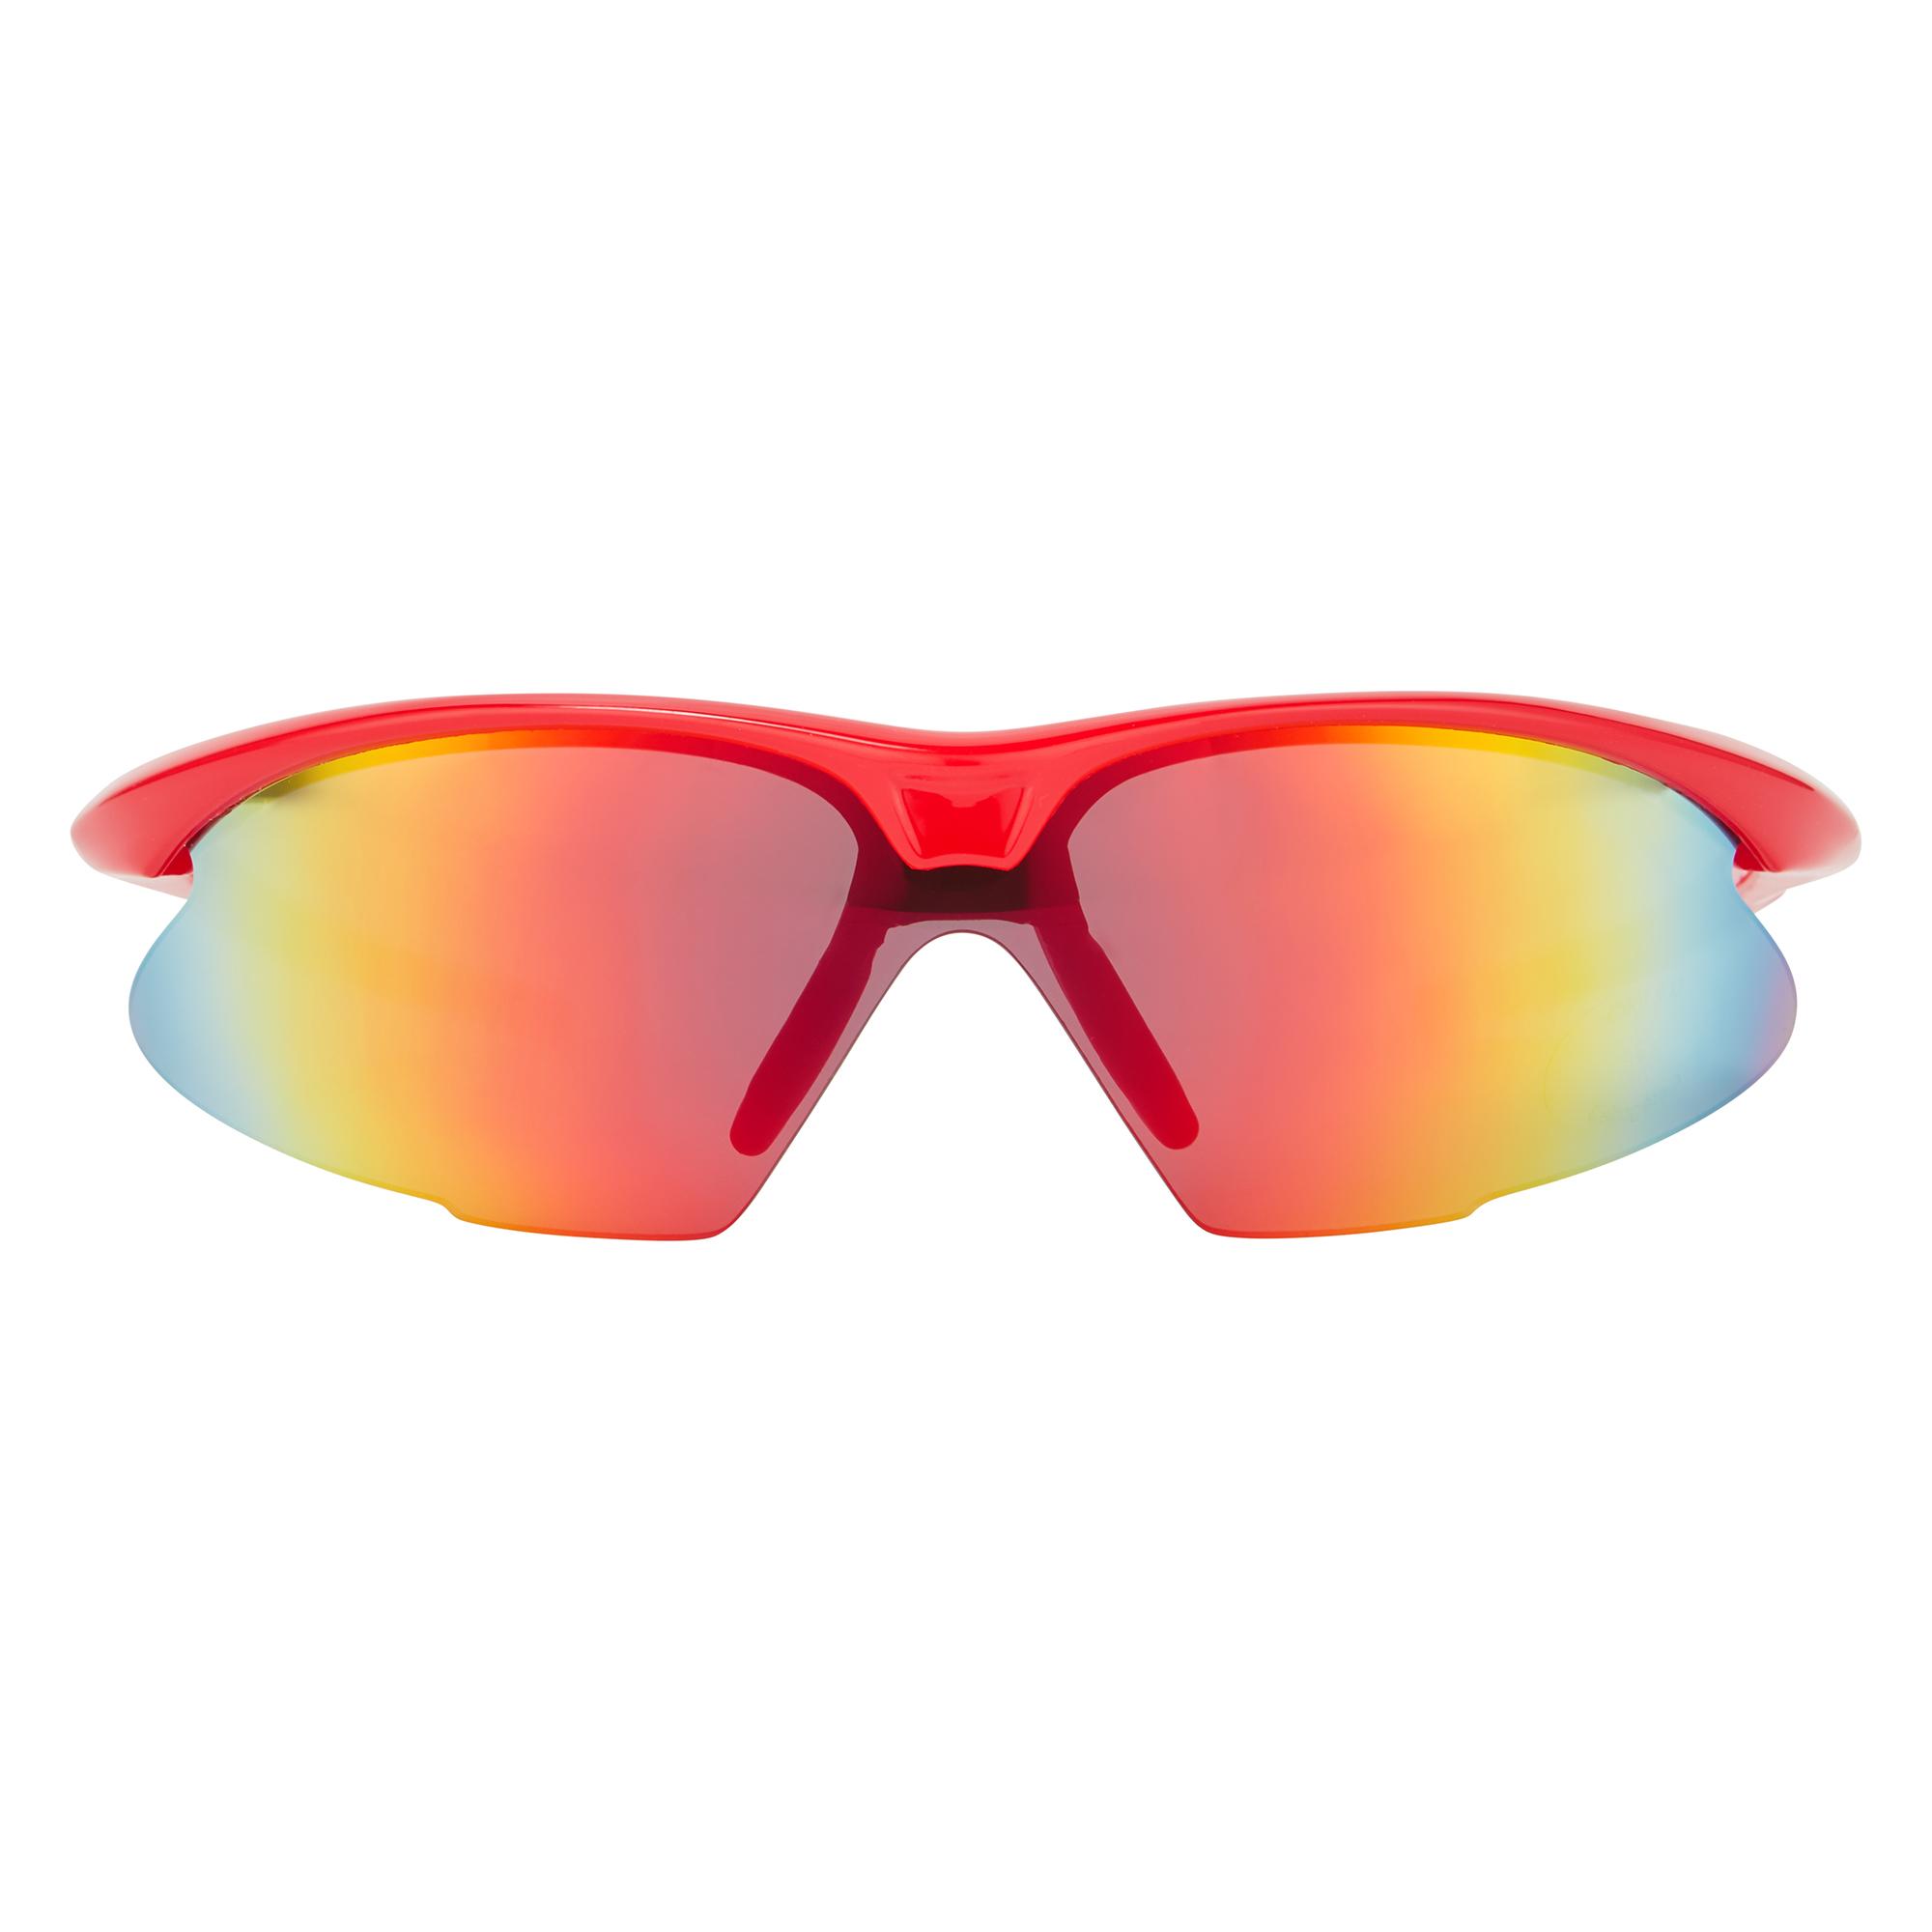 Dhb Pro Triple Lens Sunglasses  All Red